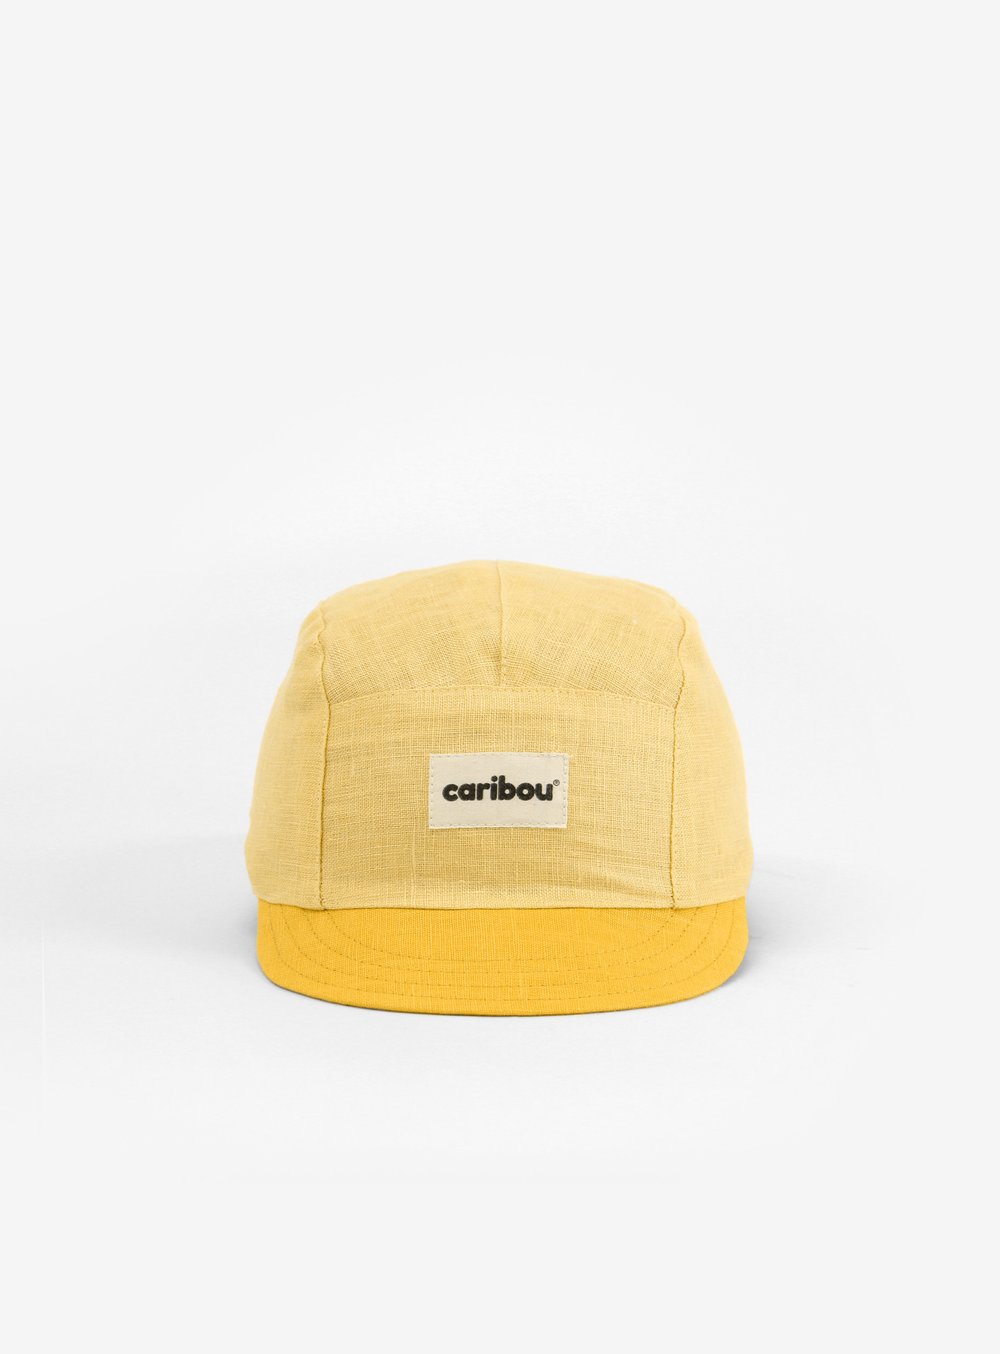 Caribou - Children's Cap Duo Yellow